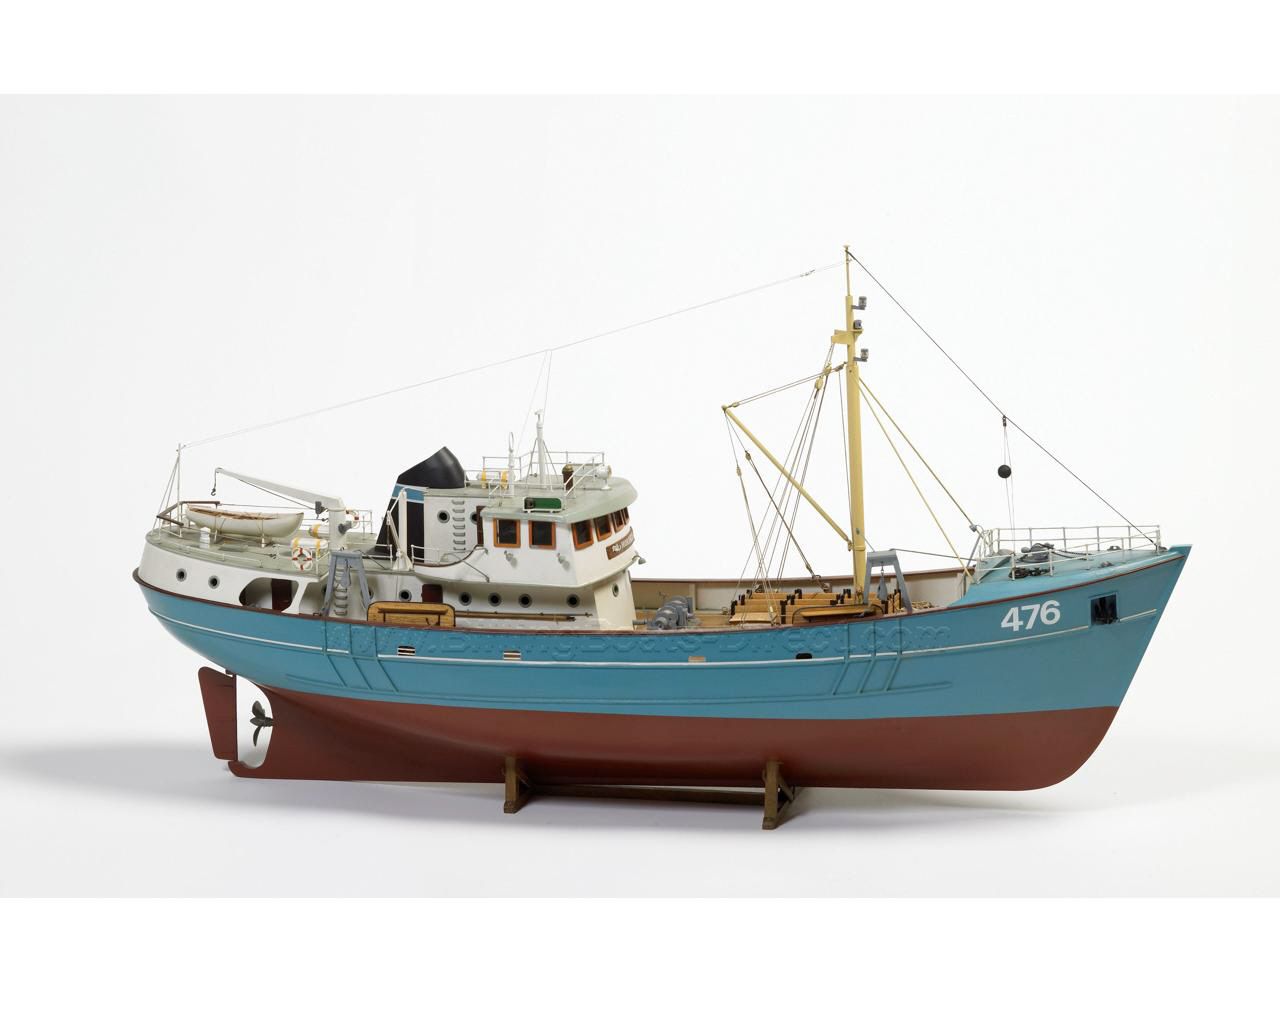 Billing Boats Nordkap North Sea Trawler Model Boat Kit B476 for